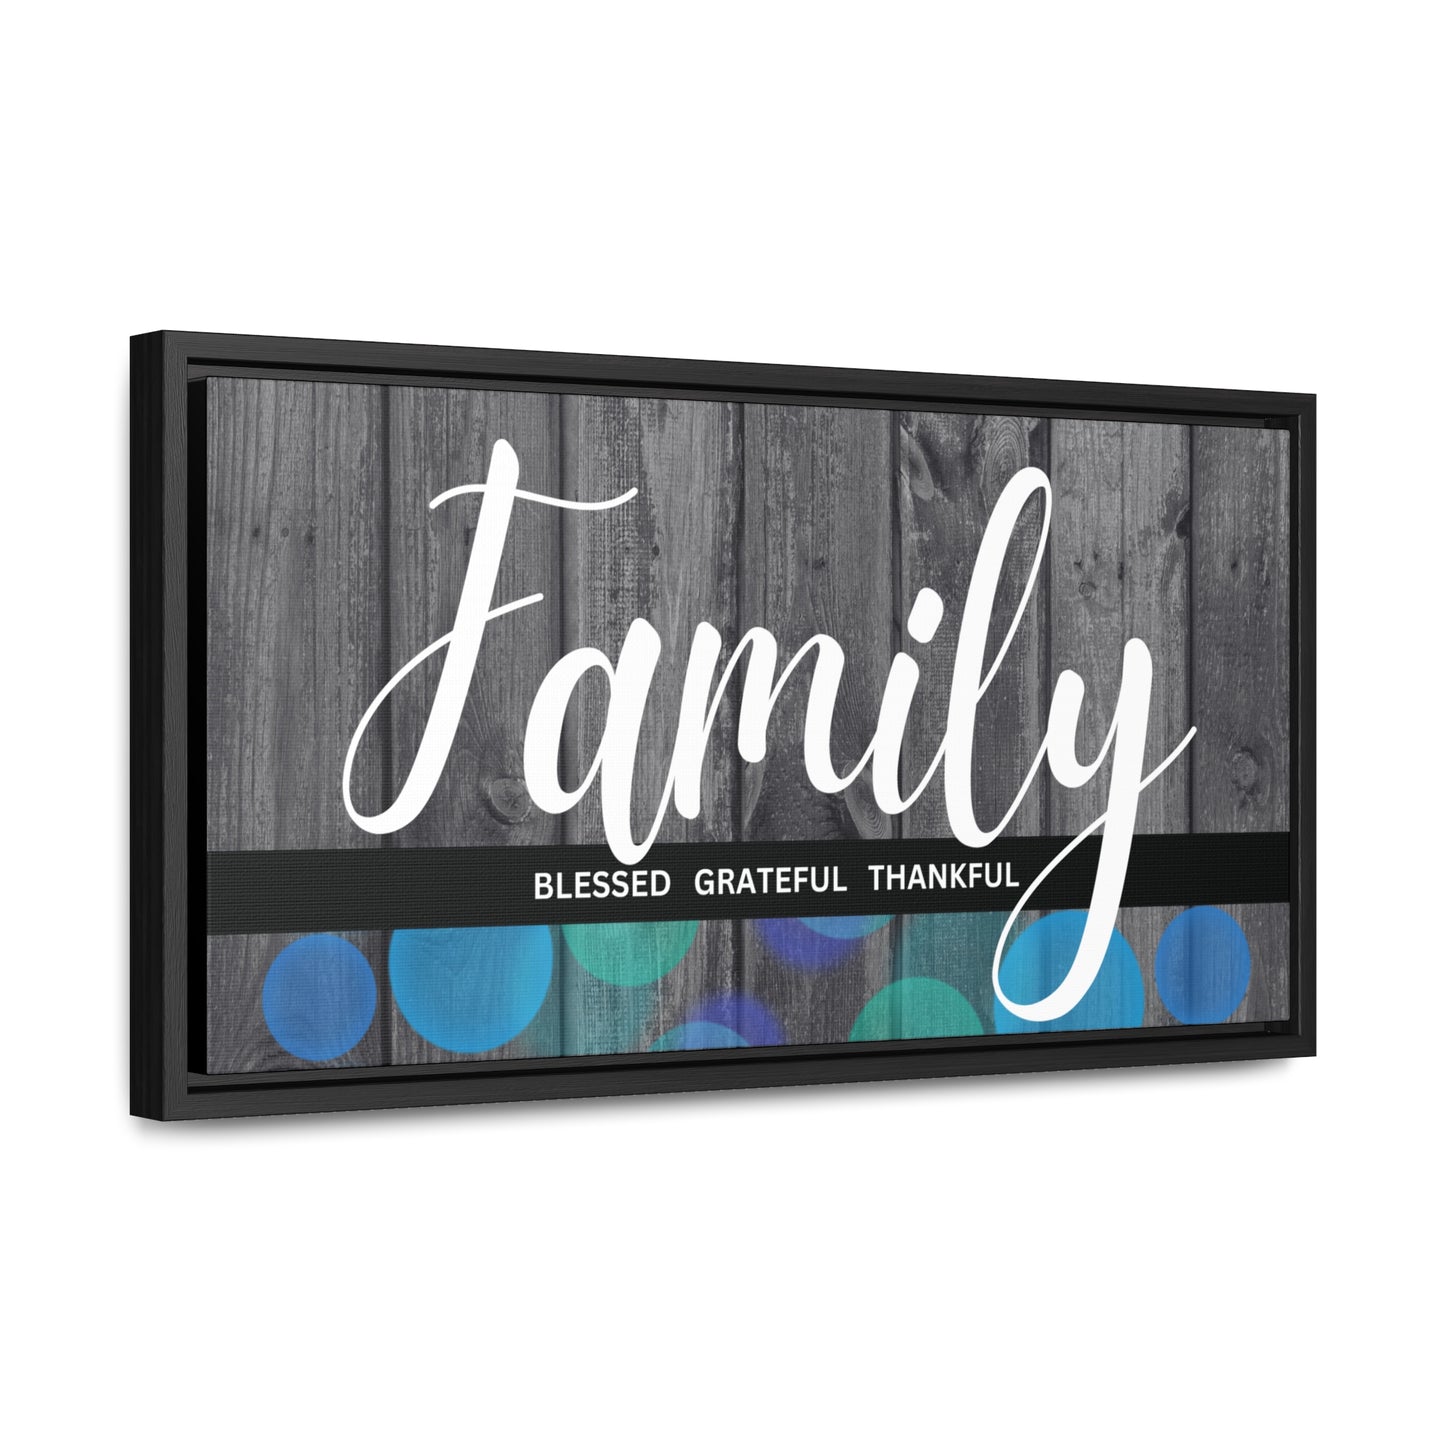 Christian Wall Art: Family, Blessed, Grateful, Thankful (Floating Frame)